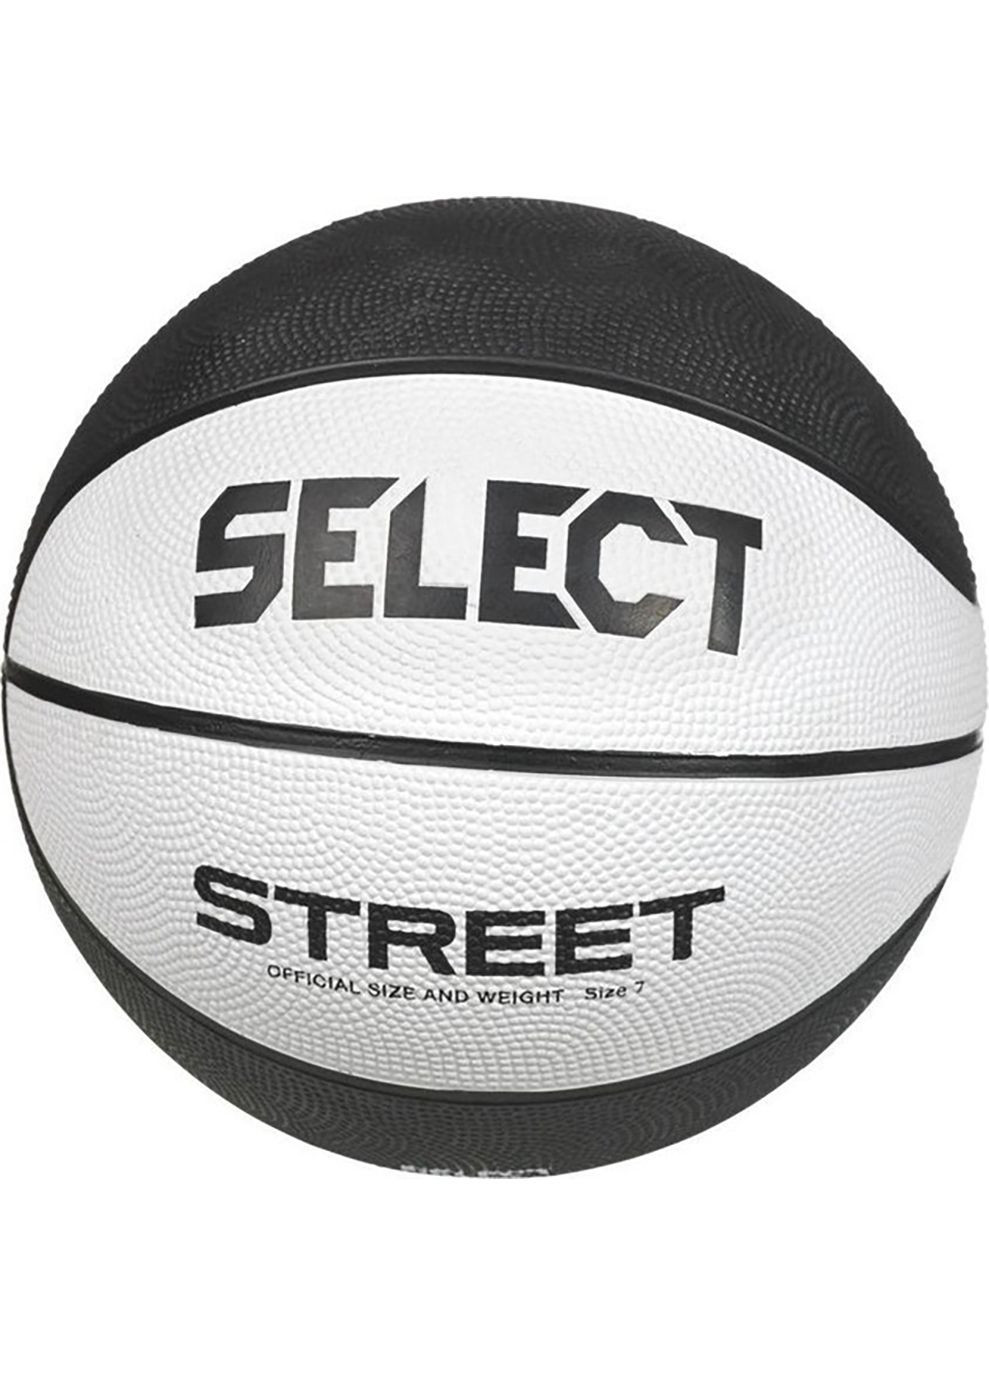 Баскетбольный Мяч BASKETBALL STREET v23 бело-черный Уни 6 Select (282317697)